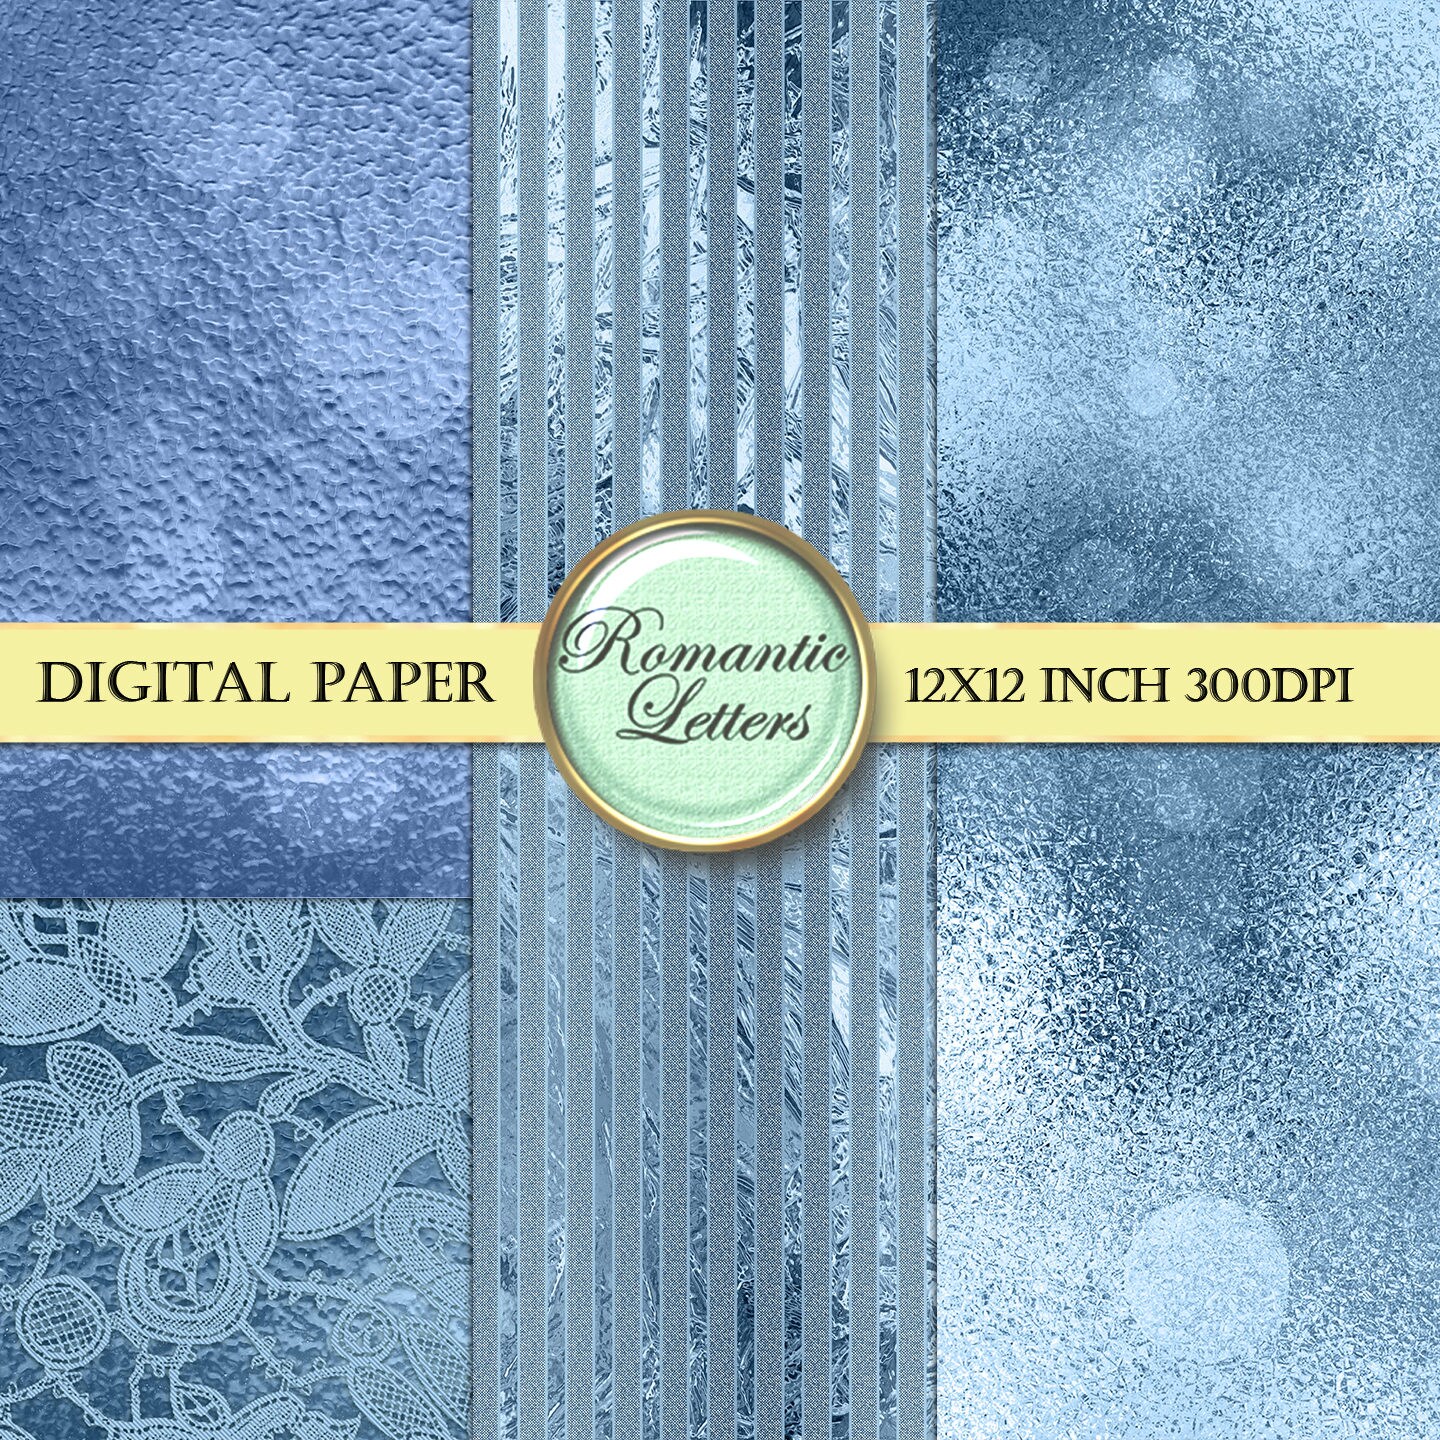 Baby Boy Digital Paper 8,5 x 11 scrapbook paper blue Texture 12 prin By  DigitalPrintableMe